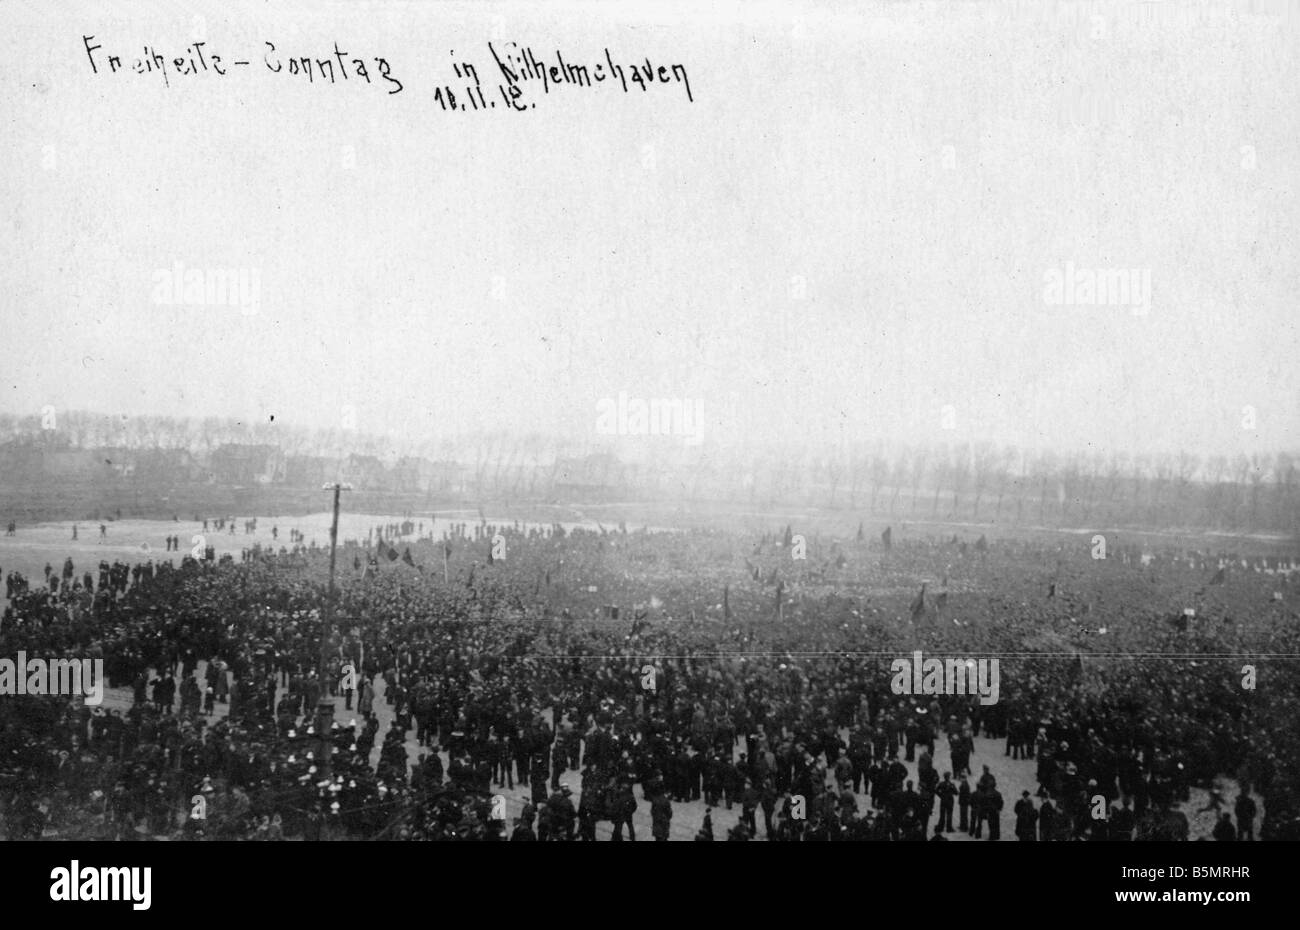 9 1918 11 10 A1 5 Nov Rev 1918 Wilhelmshaven Photo November Revolution 1918 Wilhelmshaven after the mutiny of sea farers of the Stock Photo